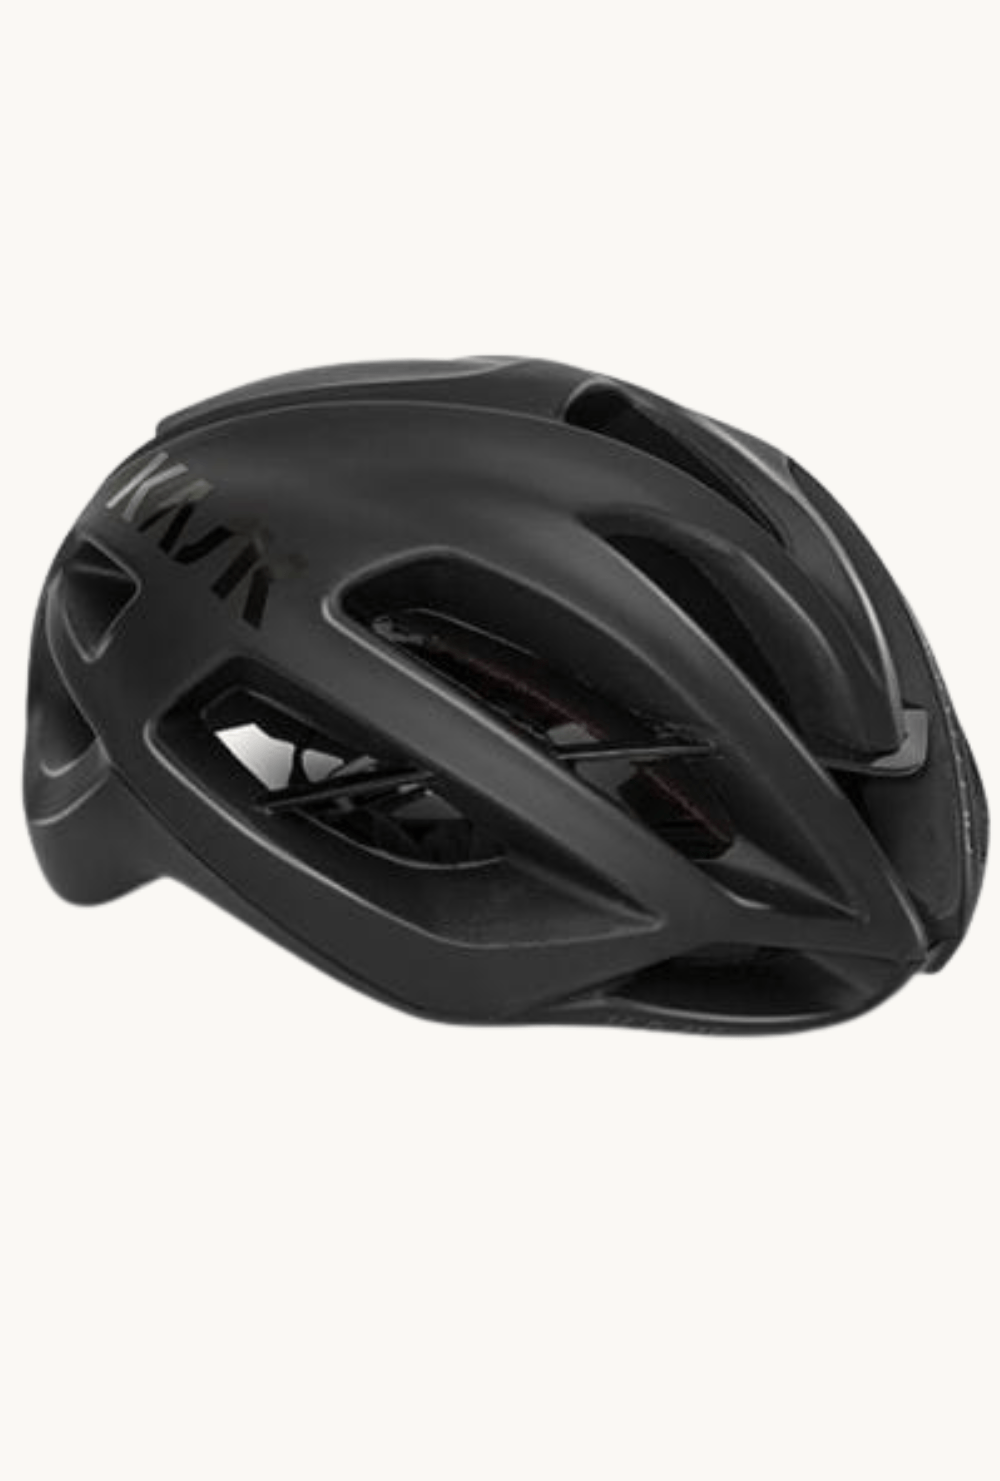 Helmet - Kask Protone Matt Blacklarge (59-62cm) / Matt Black